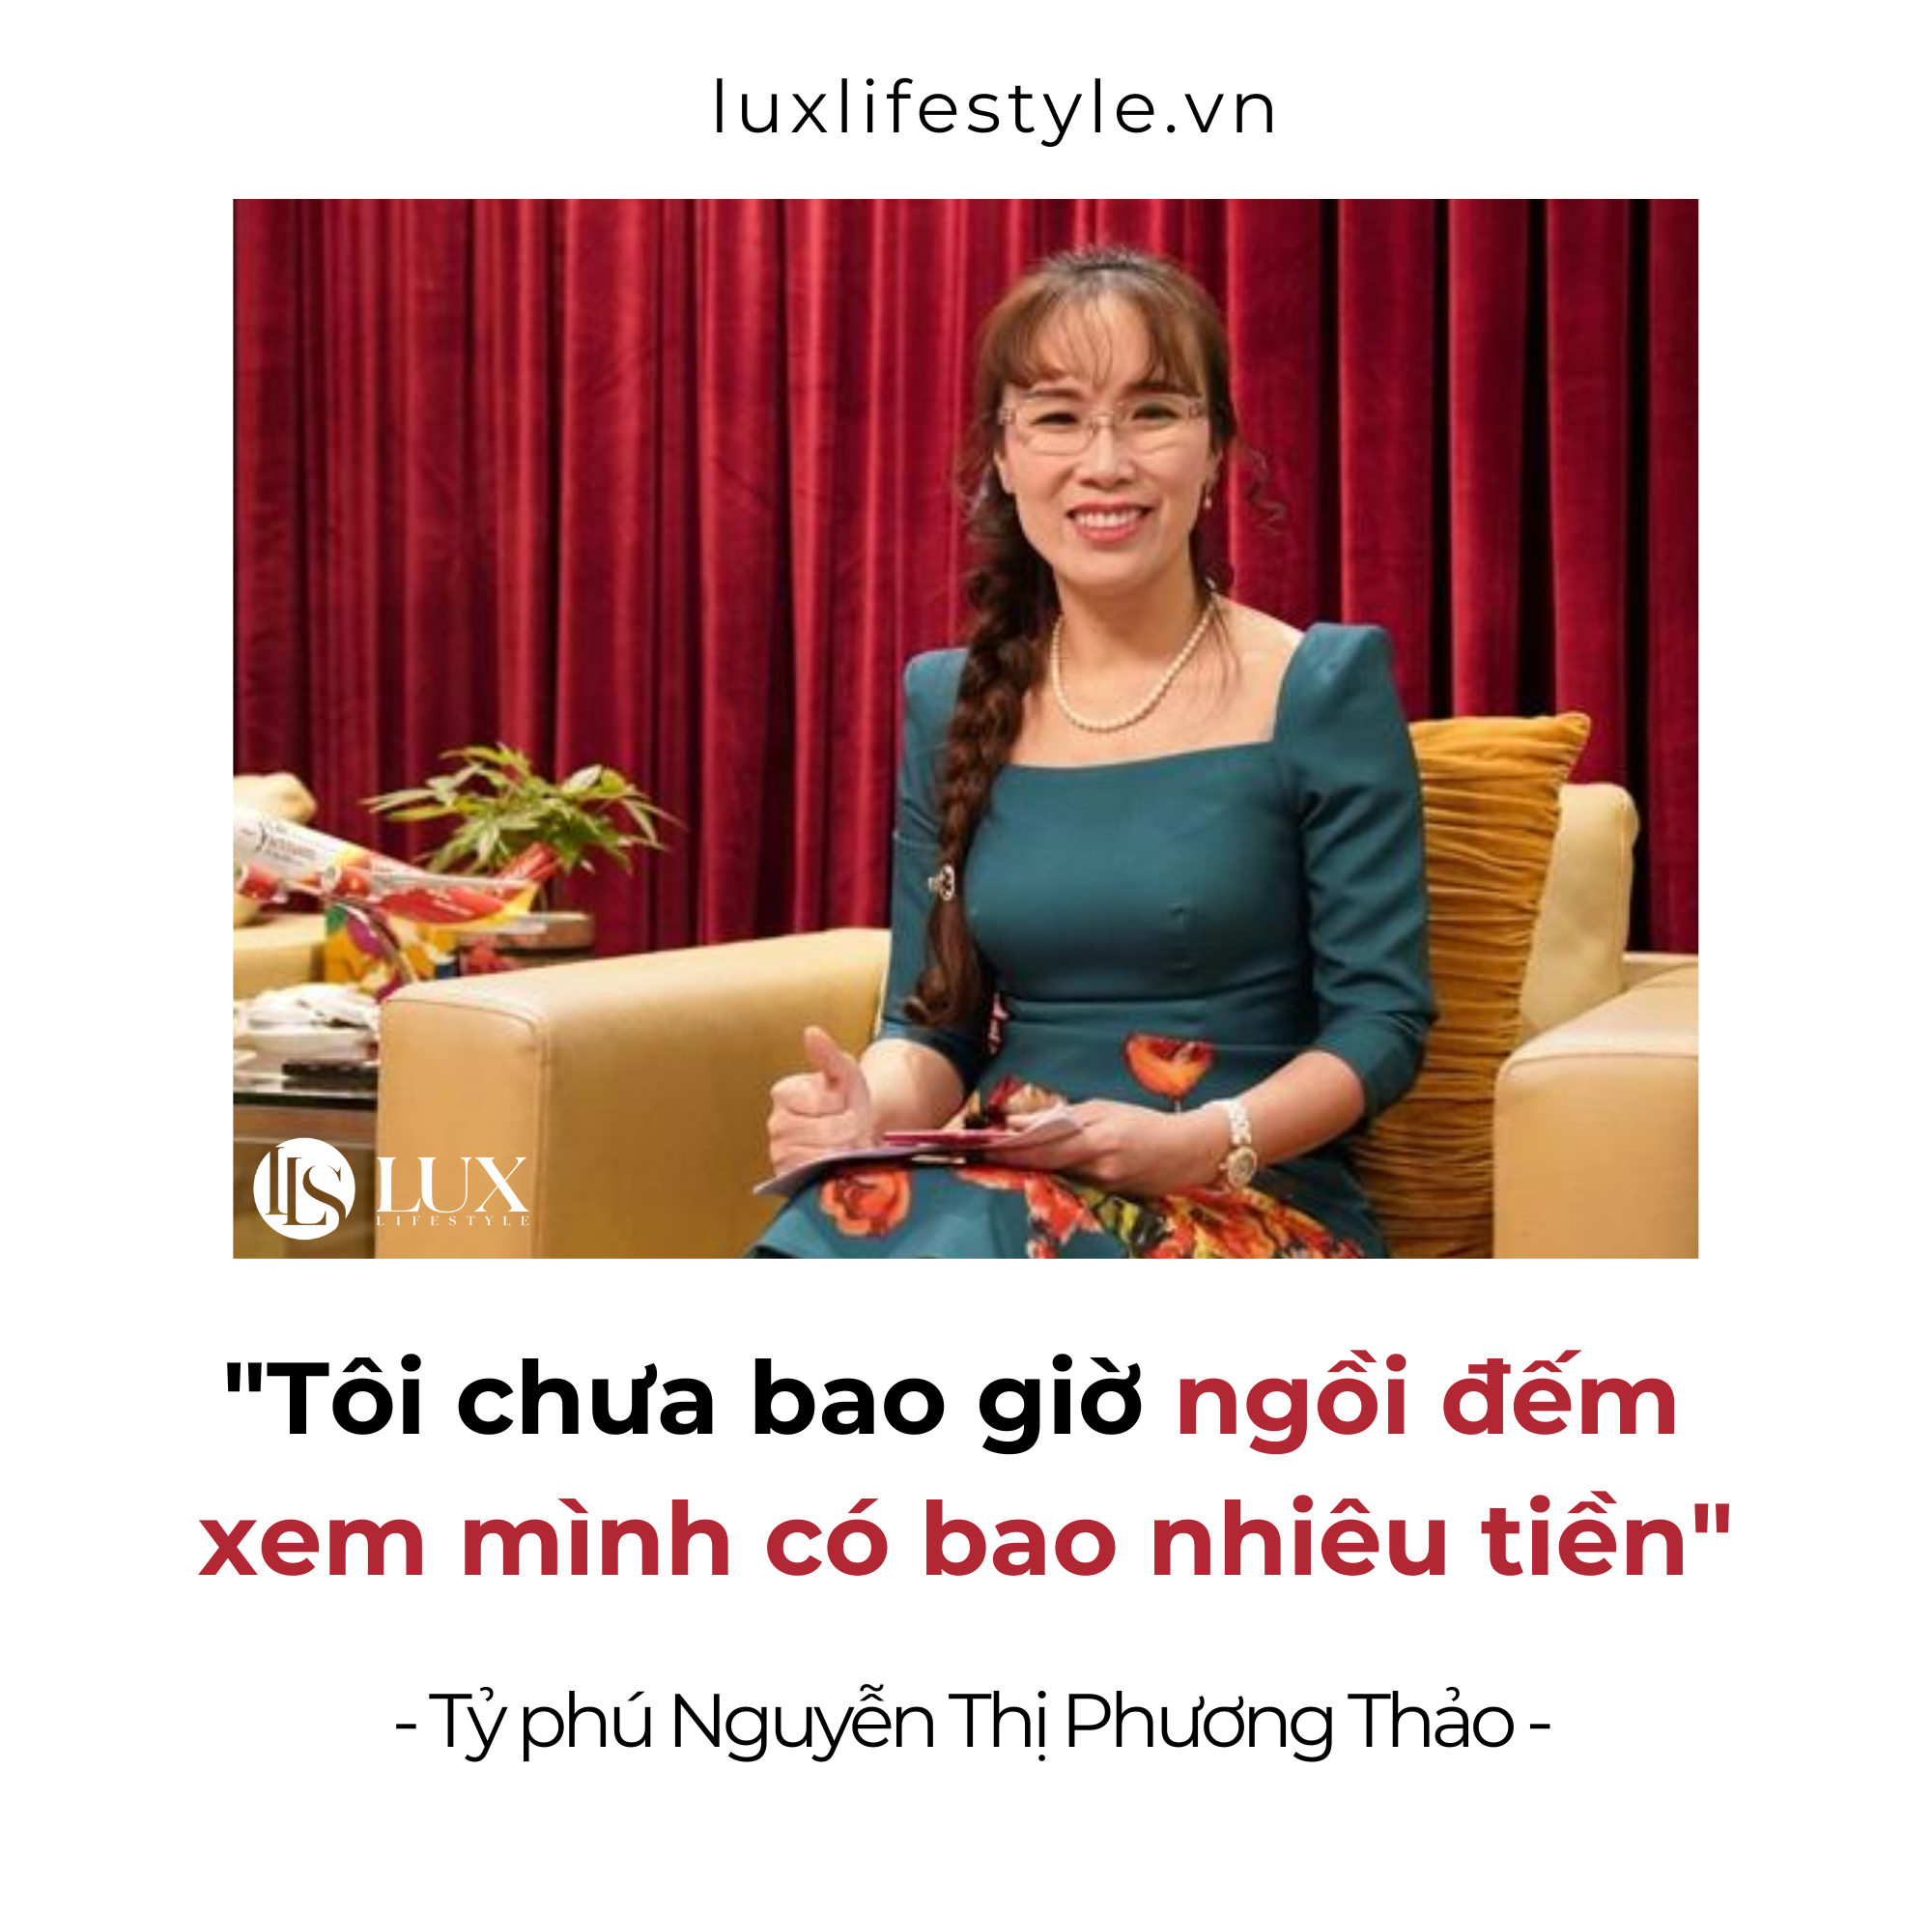 nhung-ong-trum-tai-chinh-viet-nam-nhom-dong-au-ba-chu-vietjet-nguyen-thi-phuong-thao-tu-kiem-1-trieu-do-khi-con-la-sinh-vien-den-nguoi-phu-nu-giau-nhat-viet-nam-8-2-1691143248.png